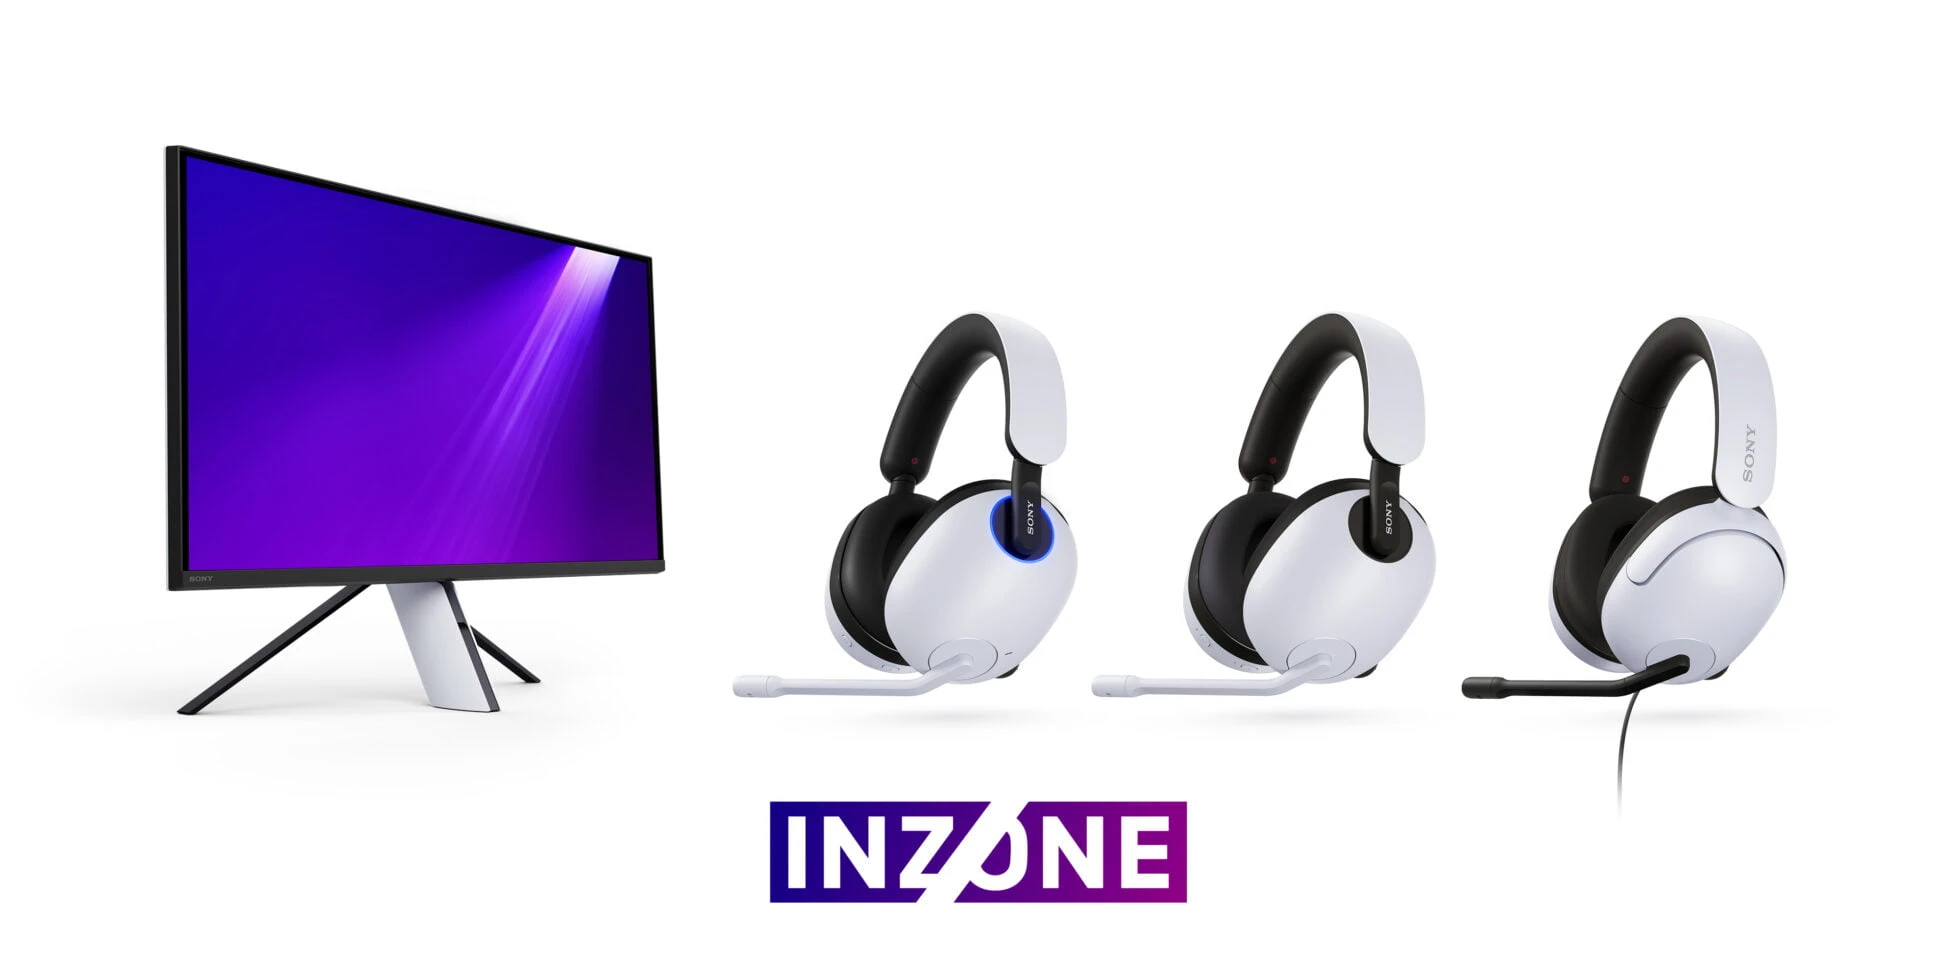 Sony INZONE – New SONY Brand of gaming equipment